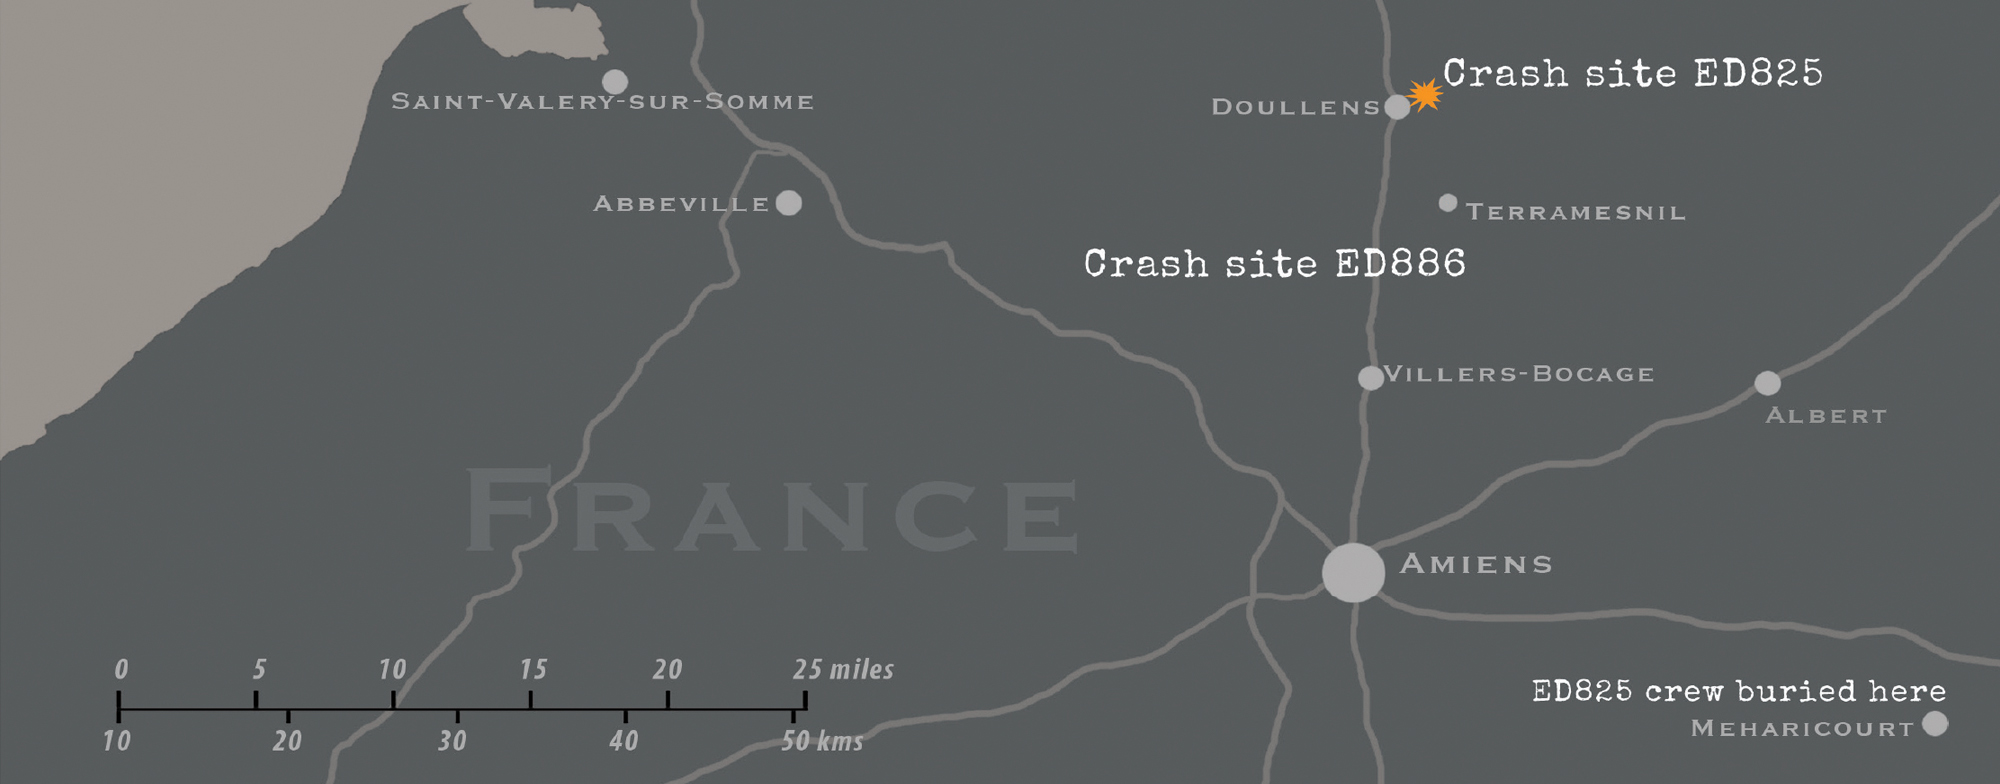 Map of crash site of Lancaster ED825